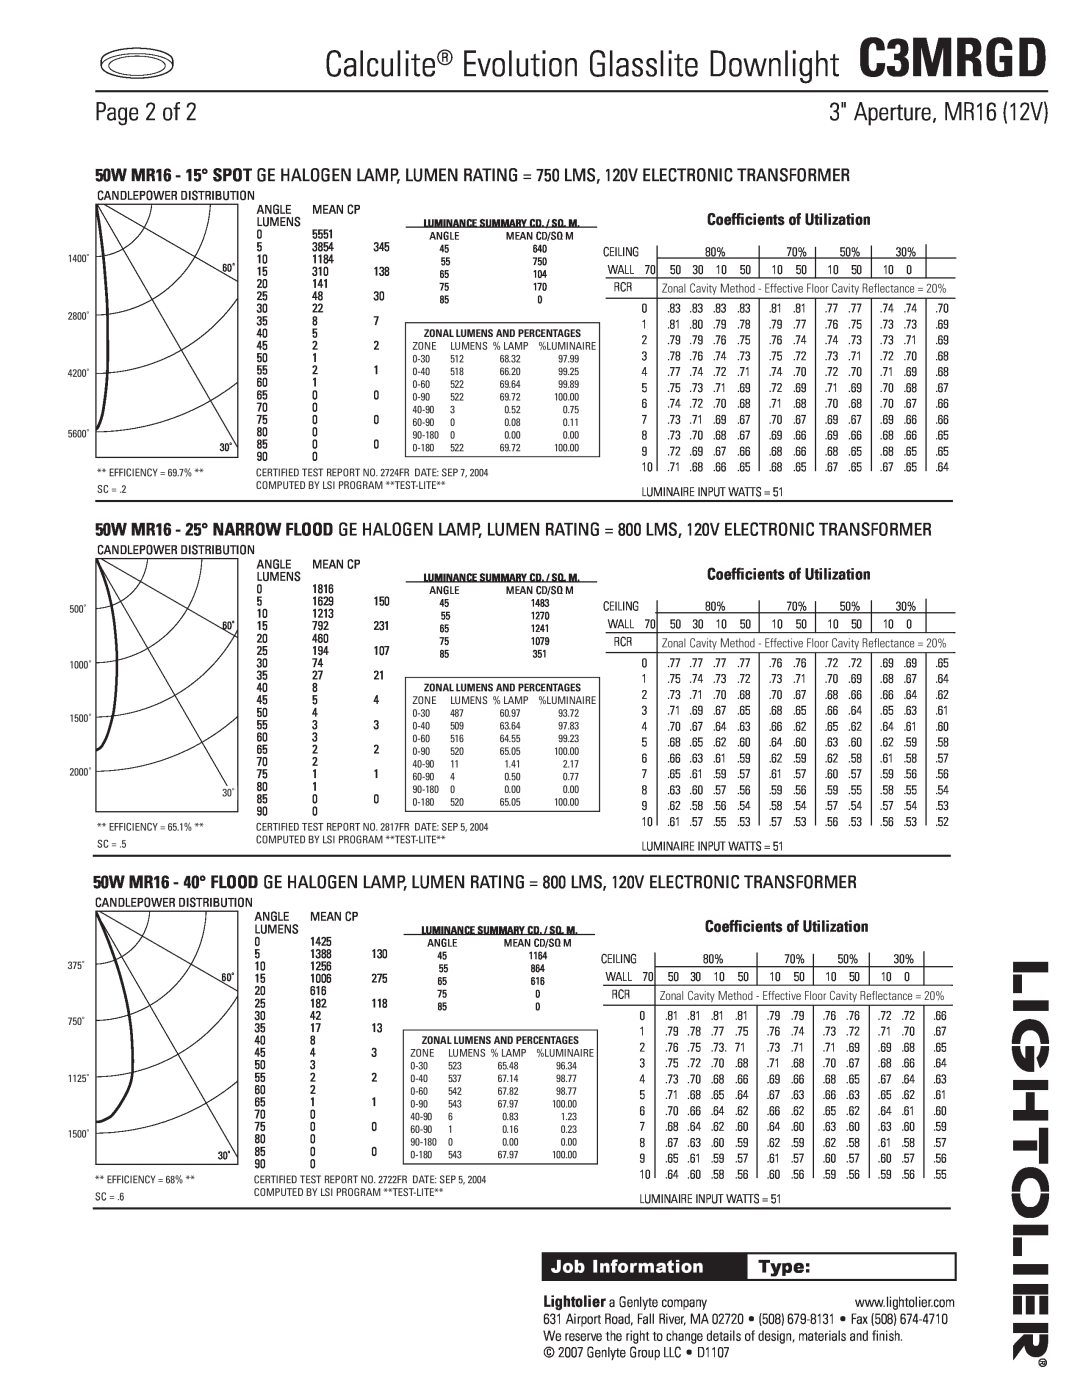 Lightolier specifications Calculite Evolution Glasslite Downlight C3MRGD, Page of, Aperture, MR16, Job Information, Type 